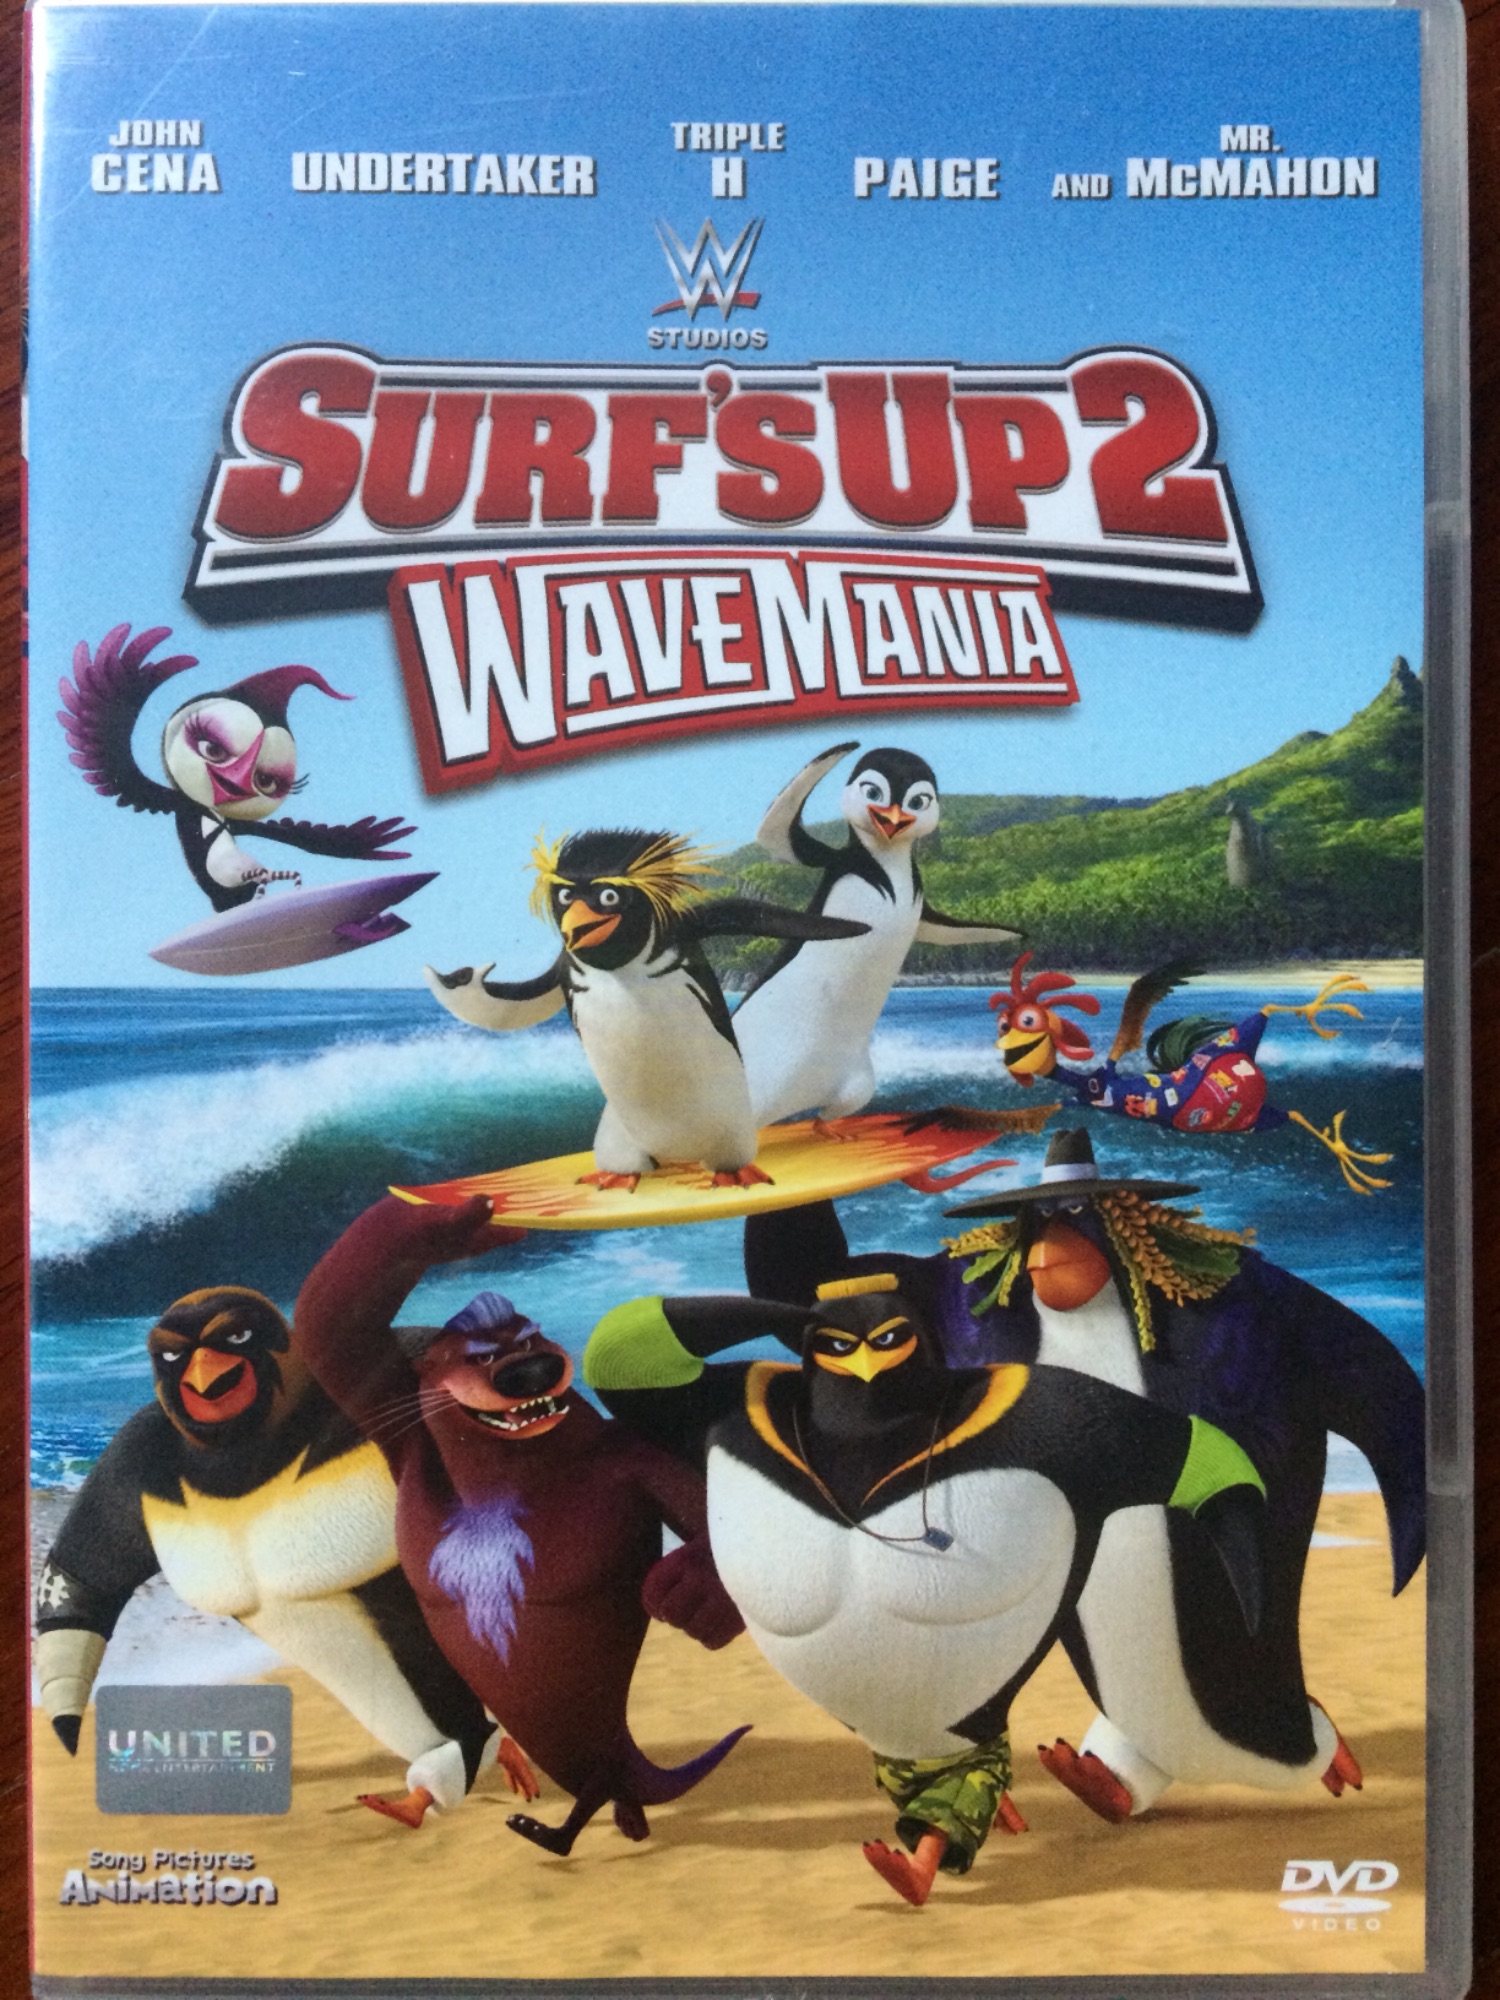 Surf 's Up 2: Wave Mania (DVD) - เซิร์ฟอัพ ไต่คลื่นยักษ์ซิ่งสะท้านโลก 2 (ดีวีดี)